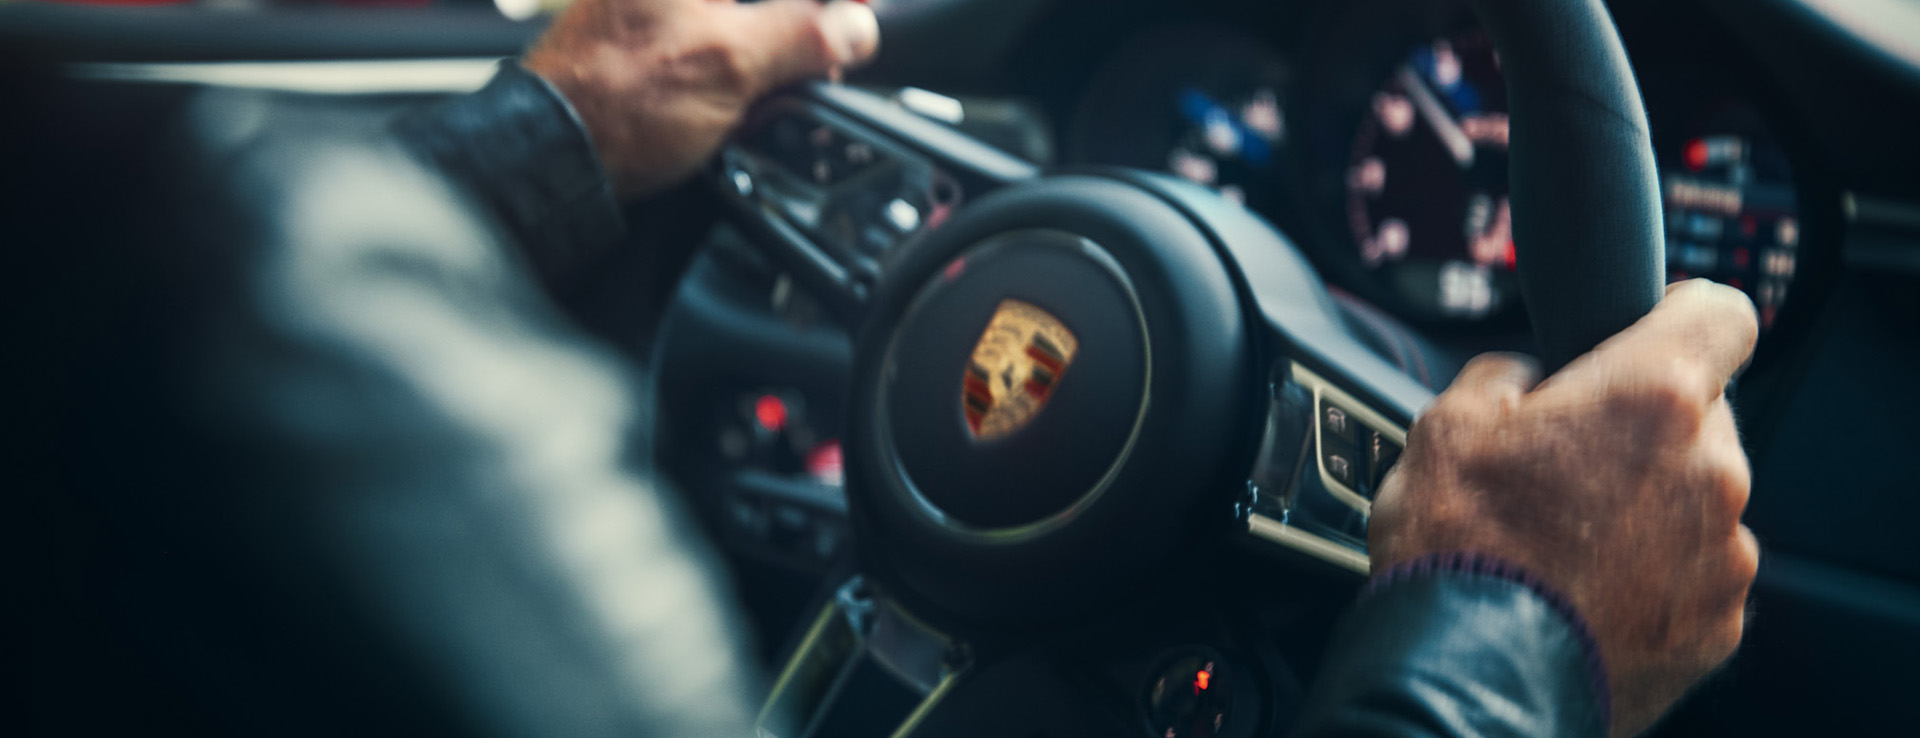 Man driving a Porsche, close-up of hands on steering wheel